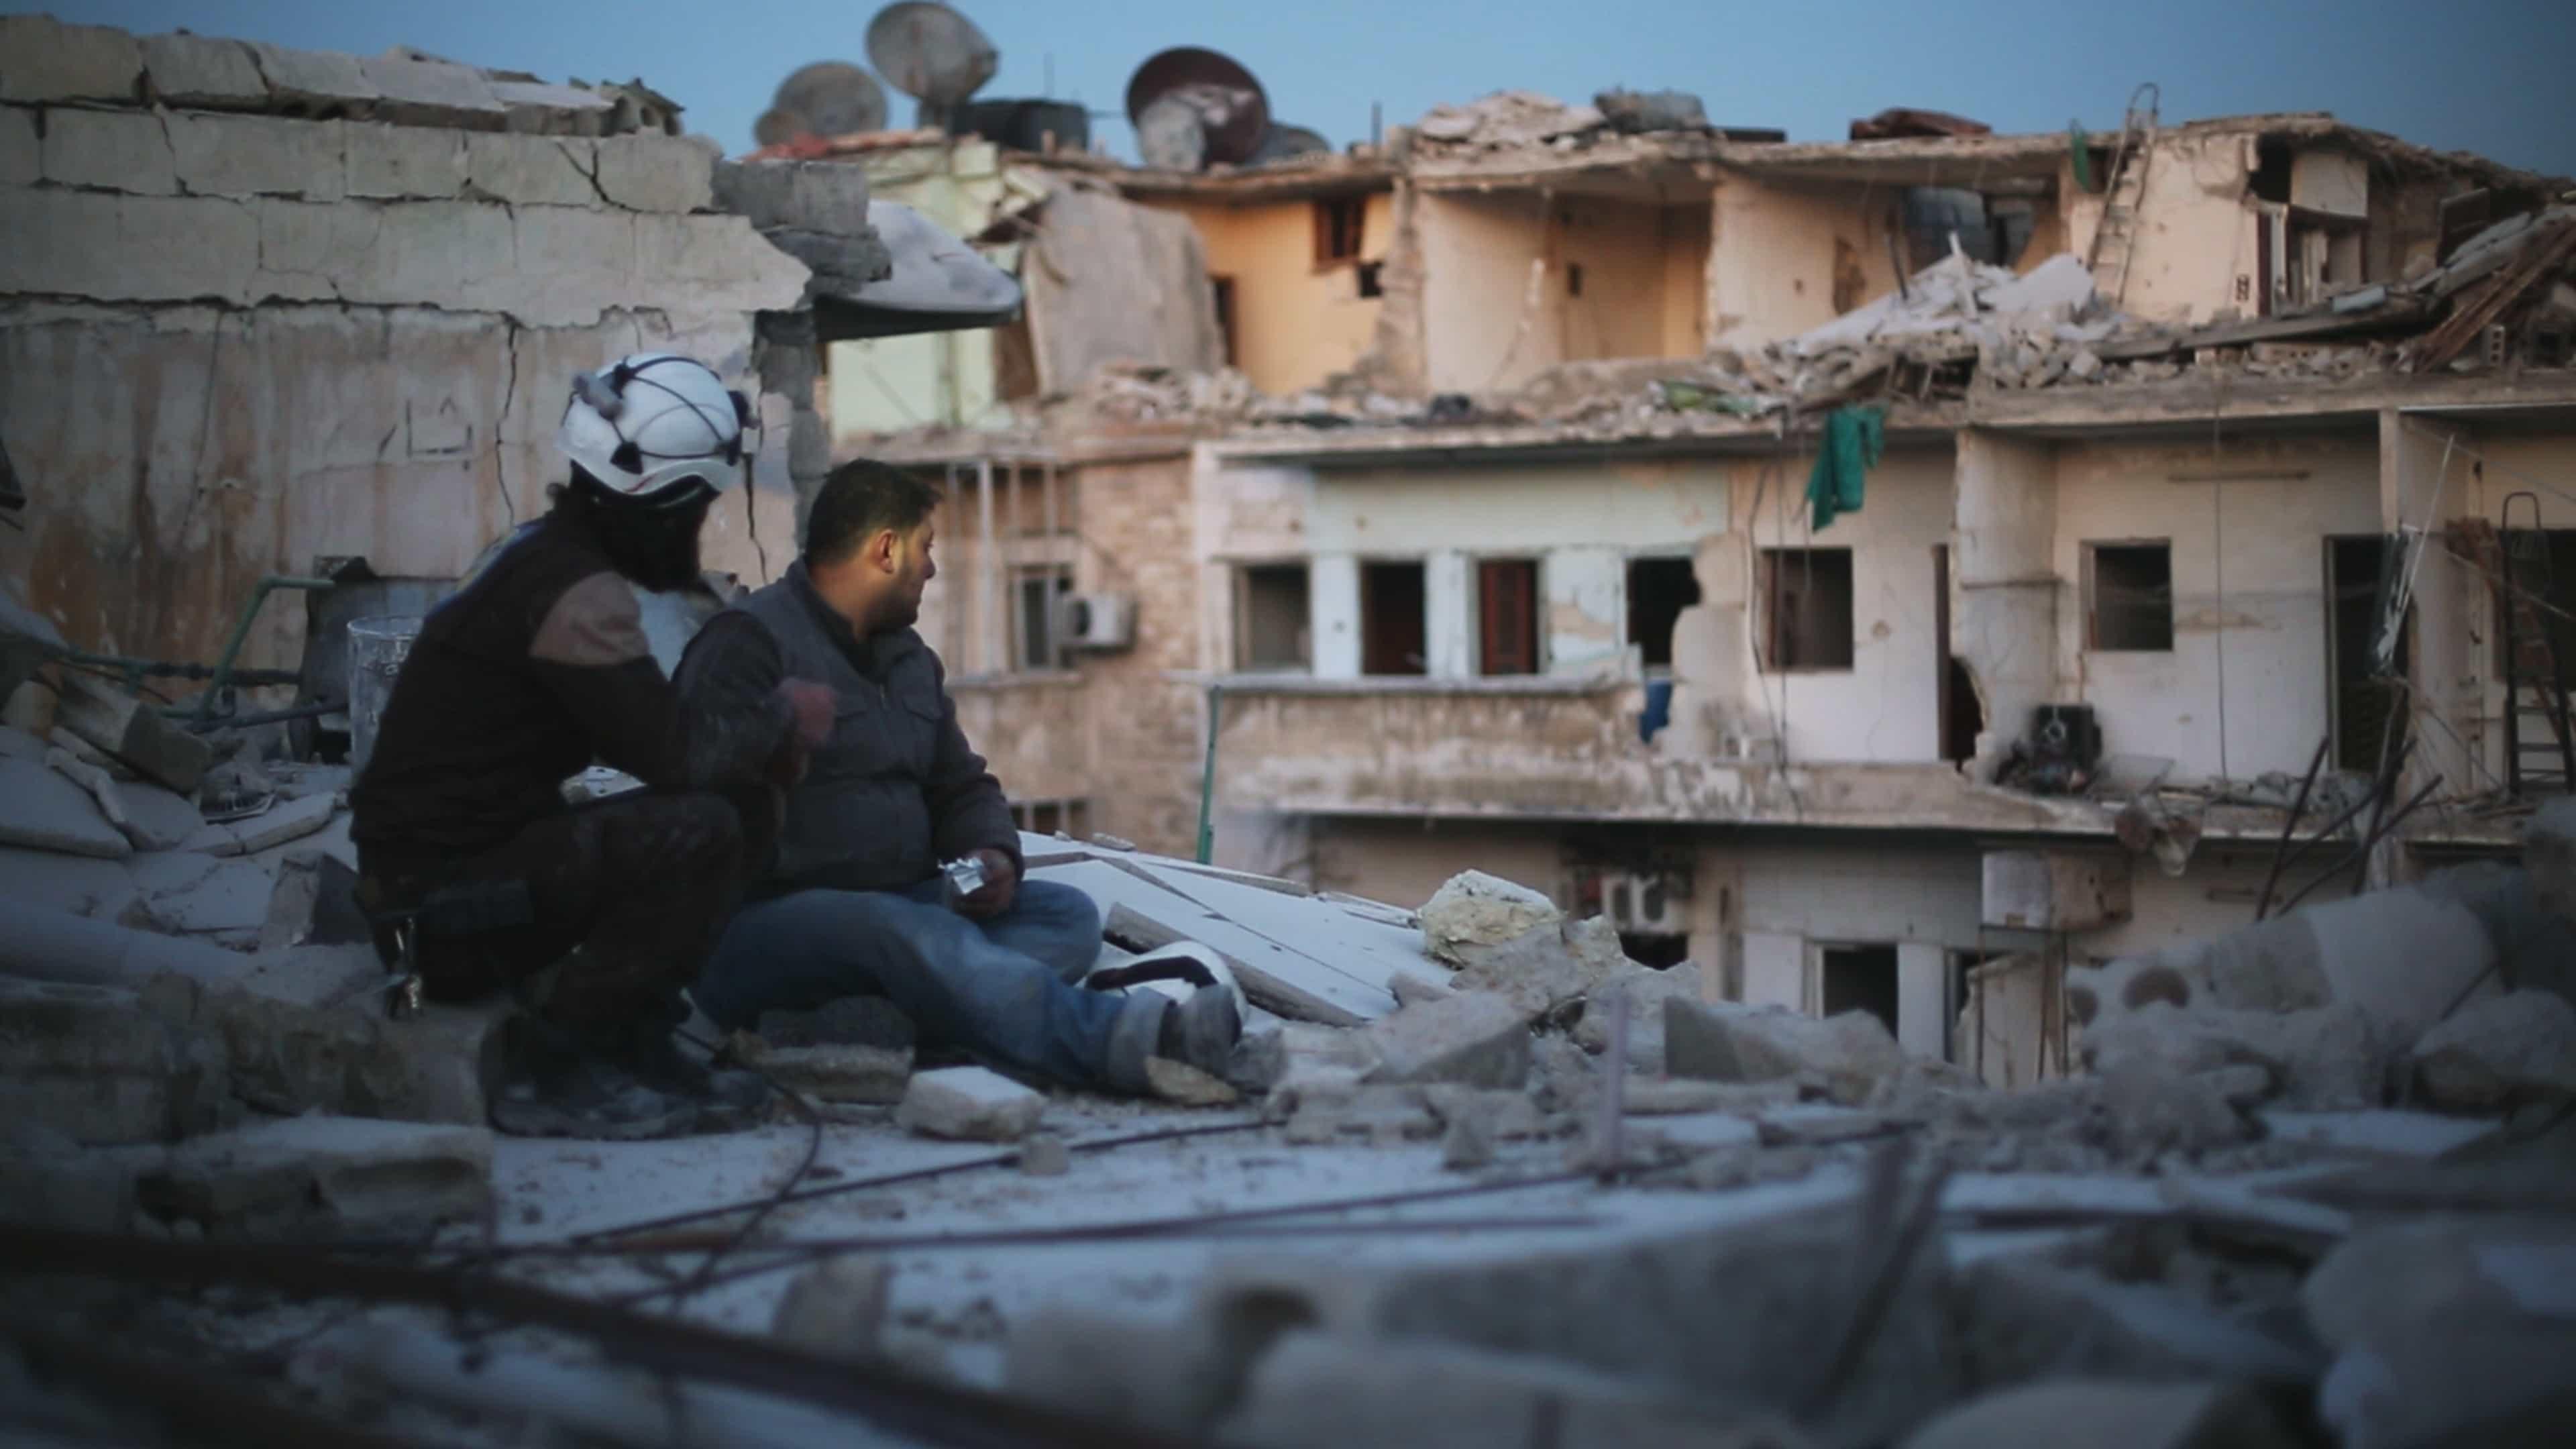 Last Men in Aleppo backdrop